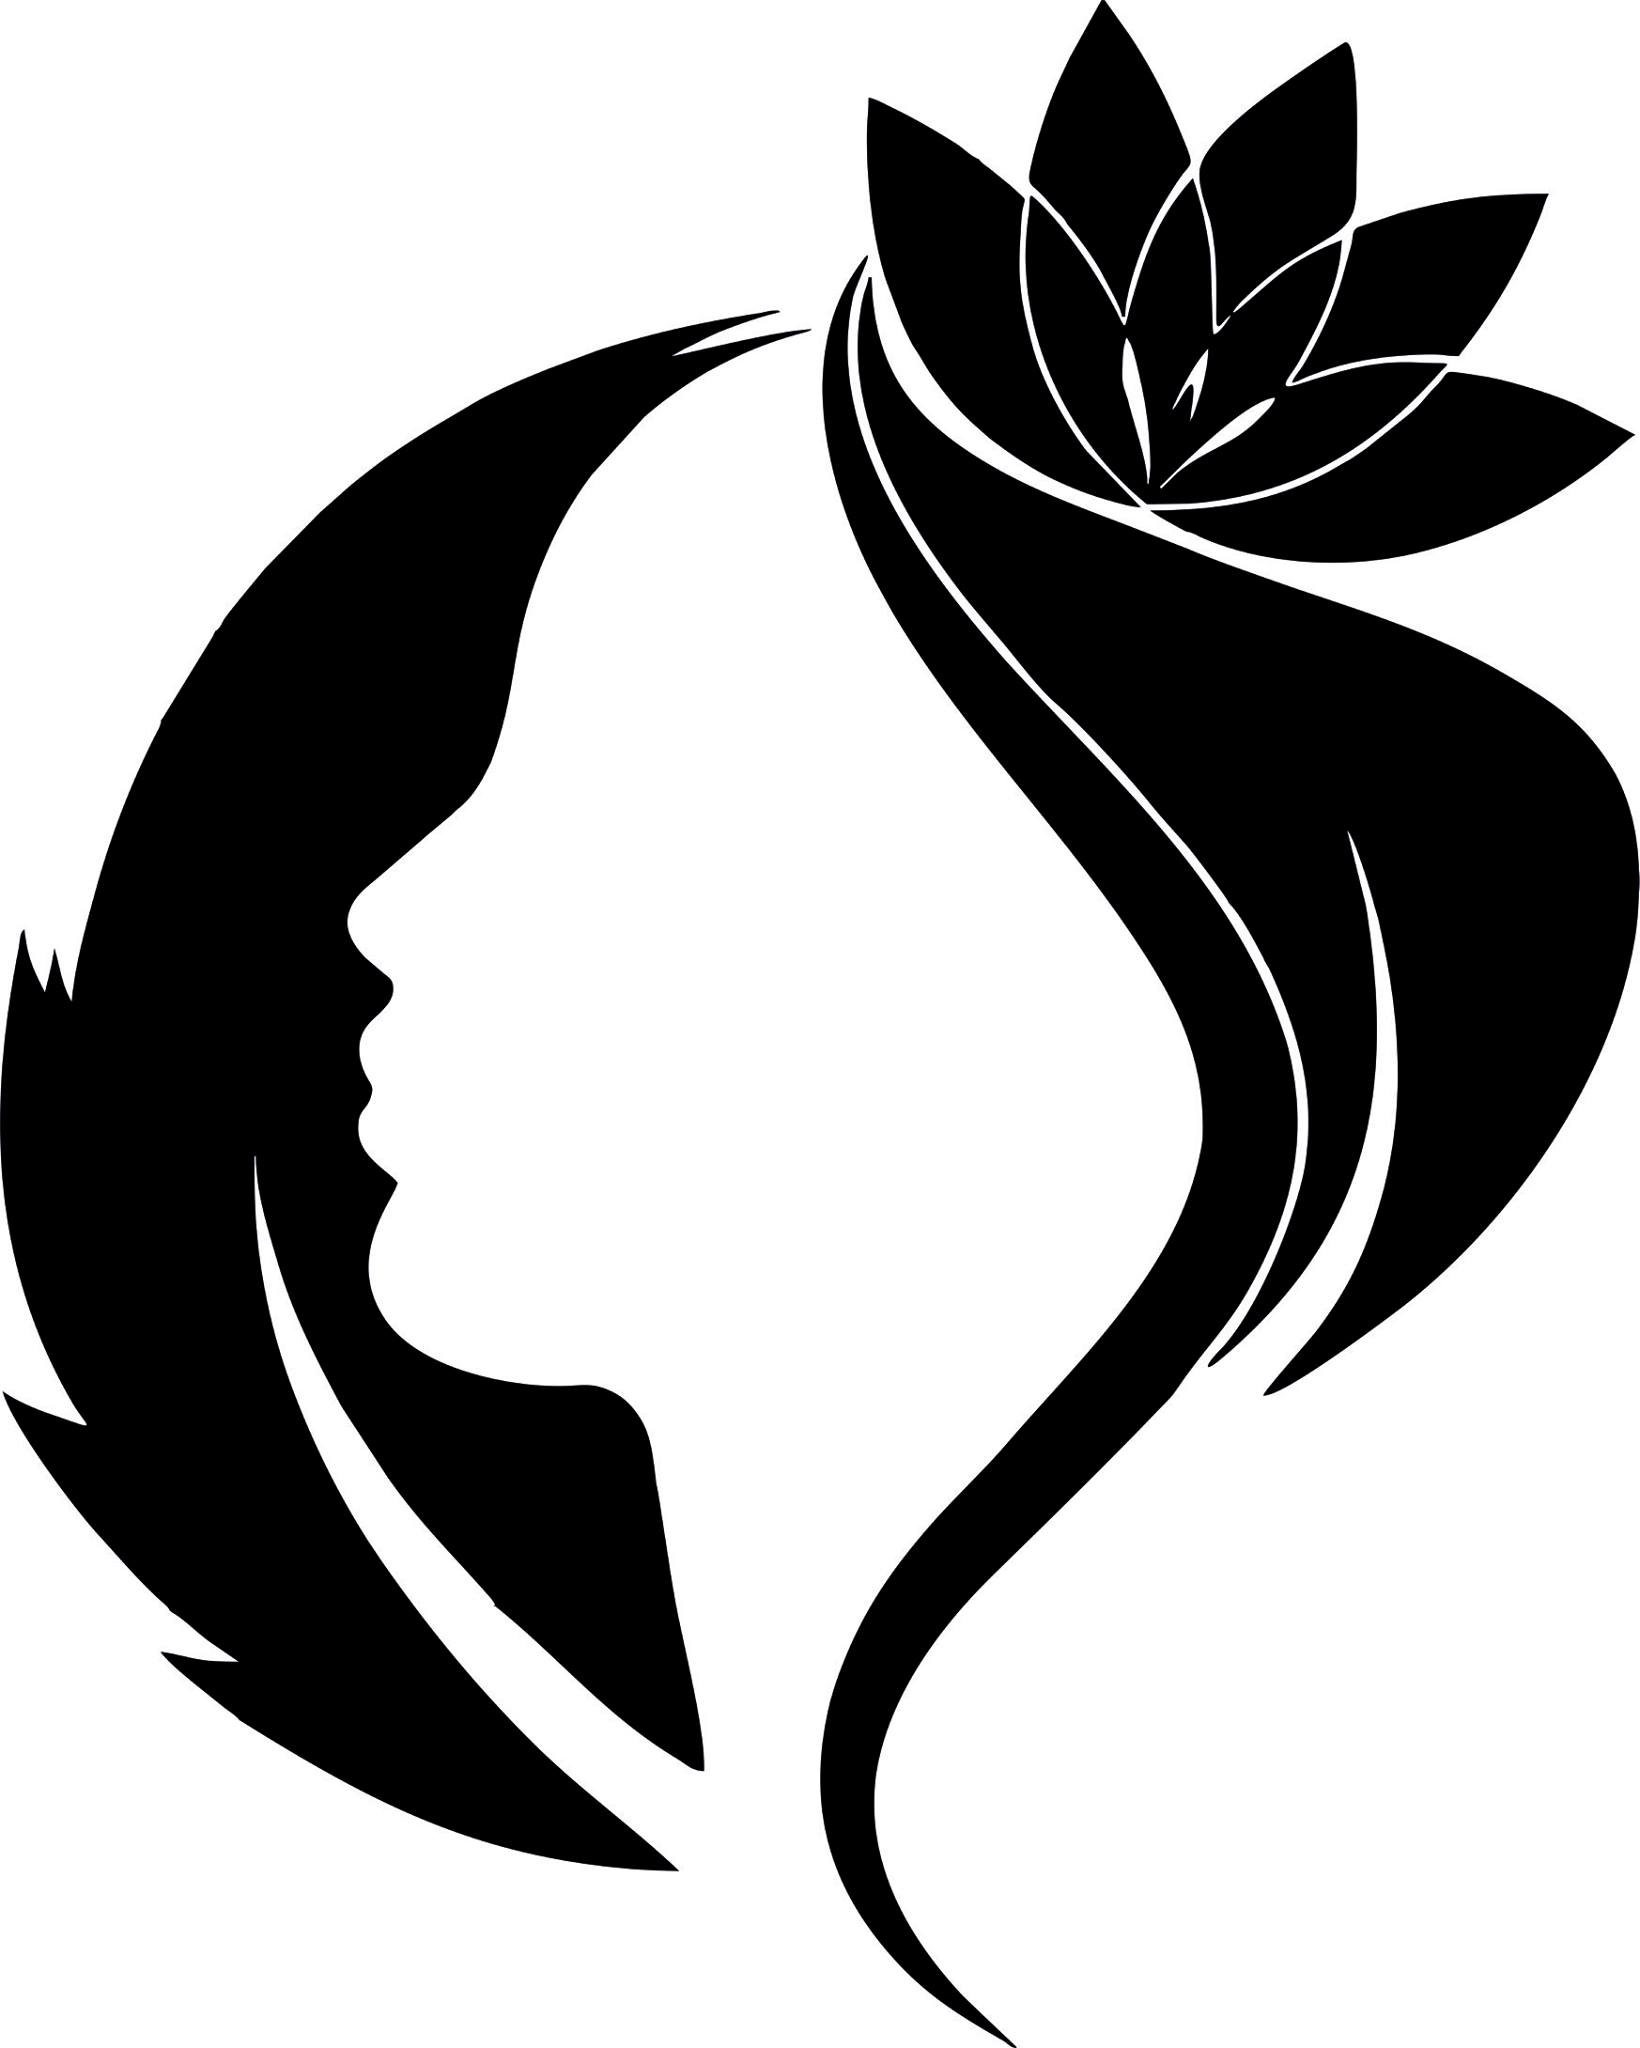 Spring Woman Vector Art jpg Image Free Download